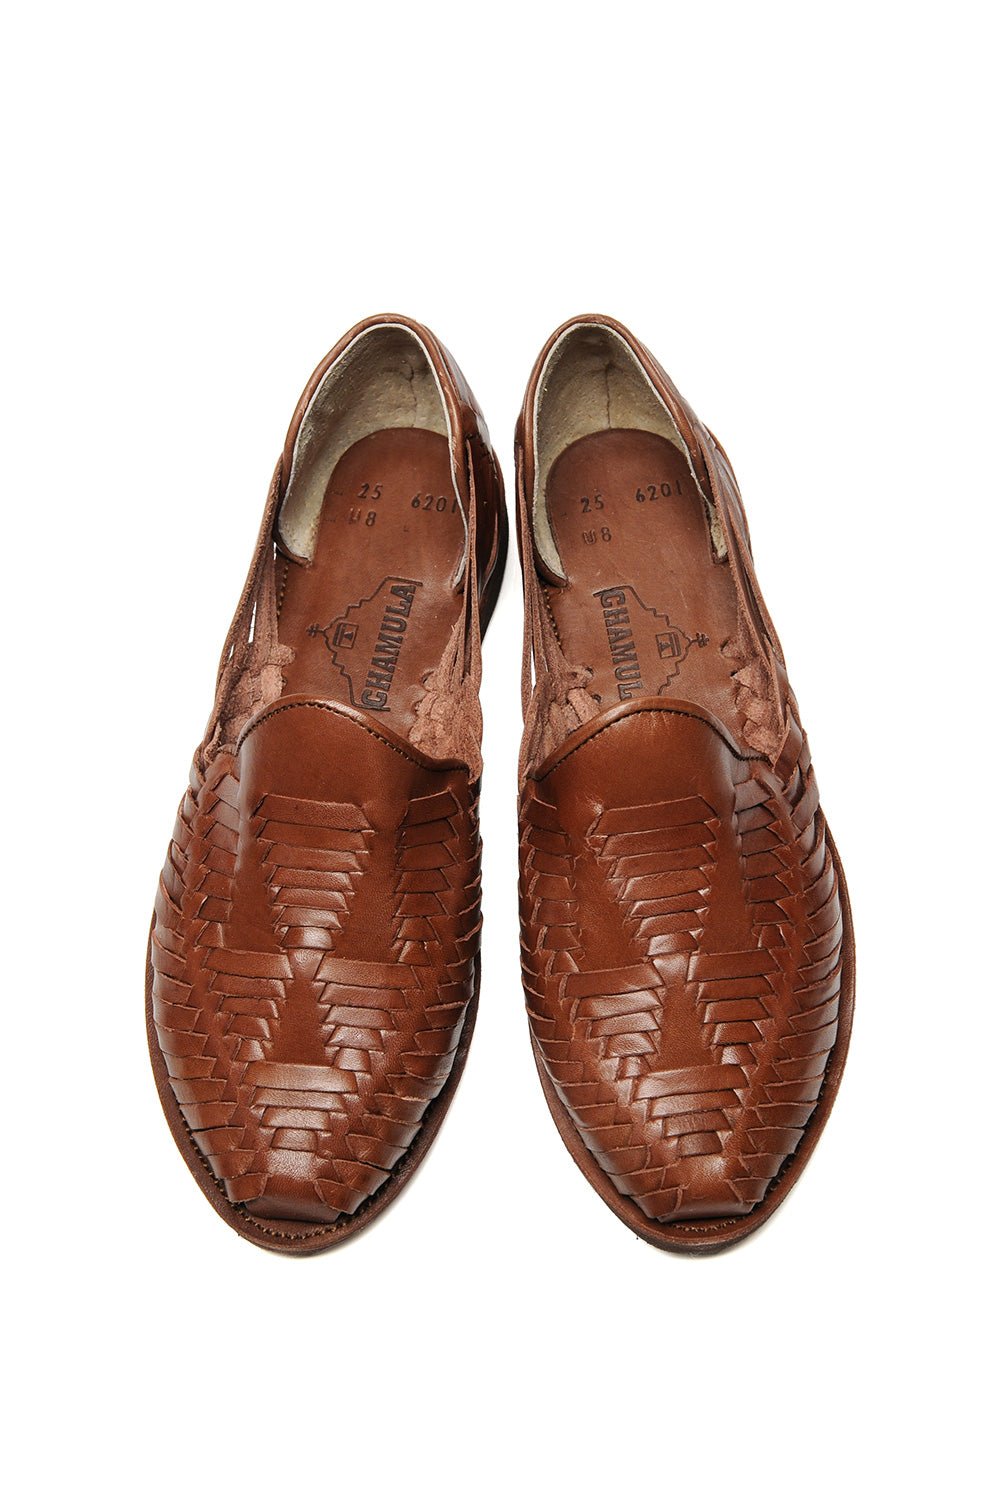 CHAMULA - Cancun Leather Huarache | Slip on Vegetable Tanned Sandals | Brown 2 - HANSEN Garments